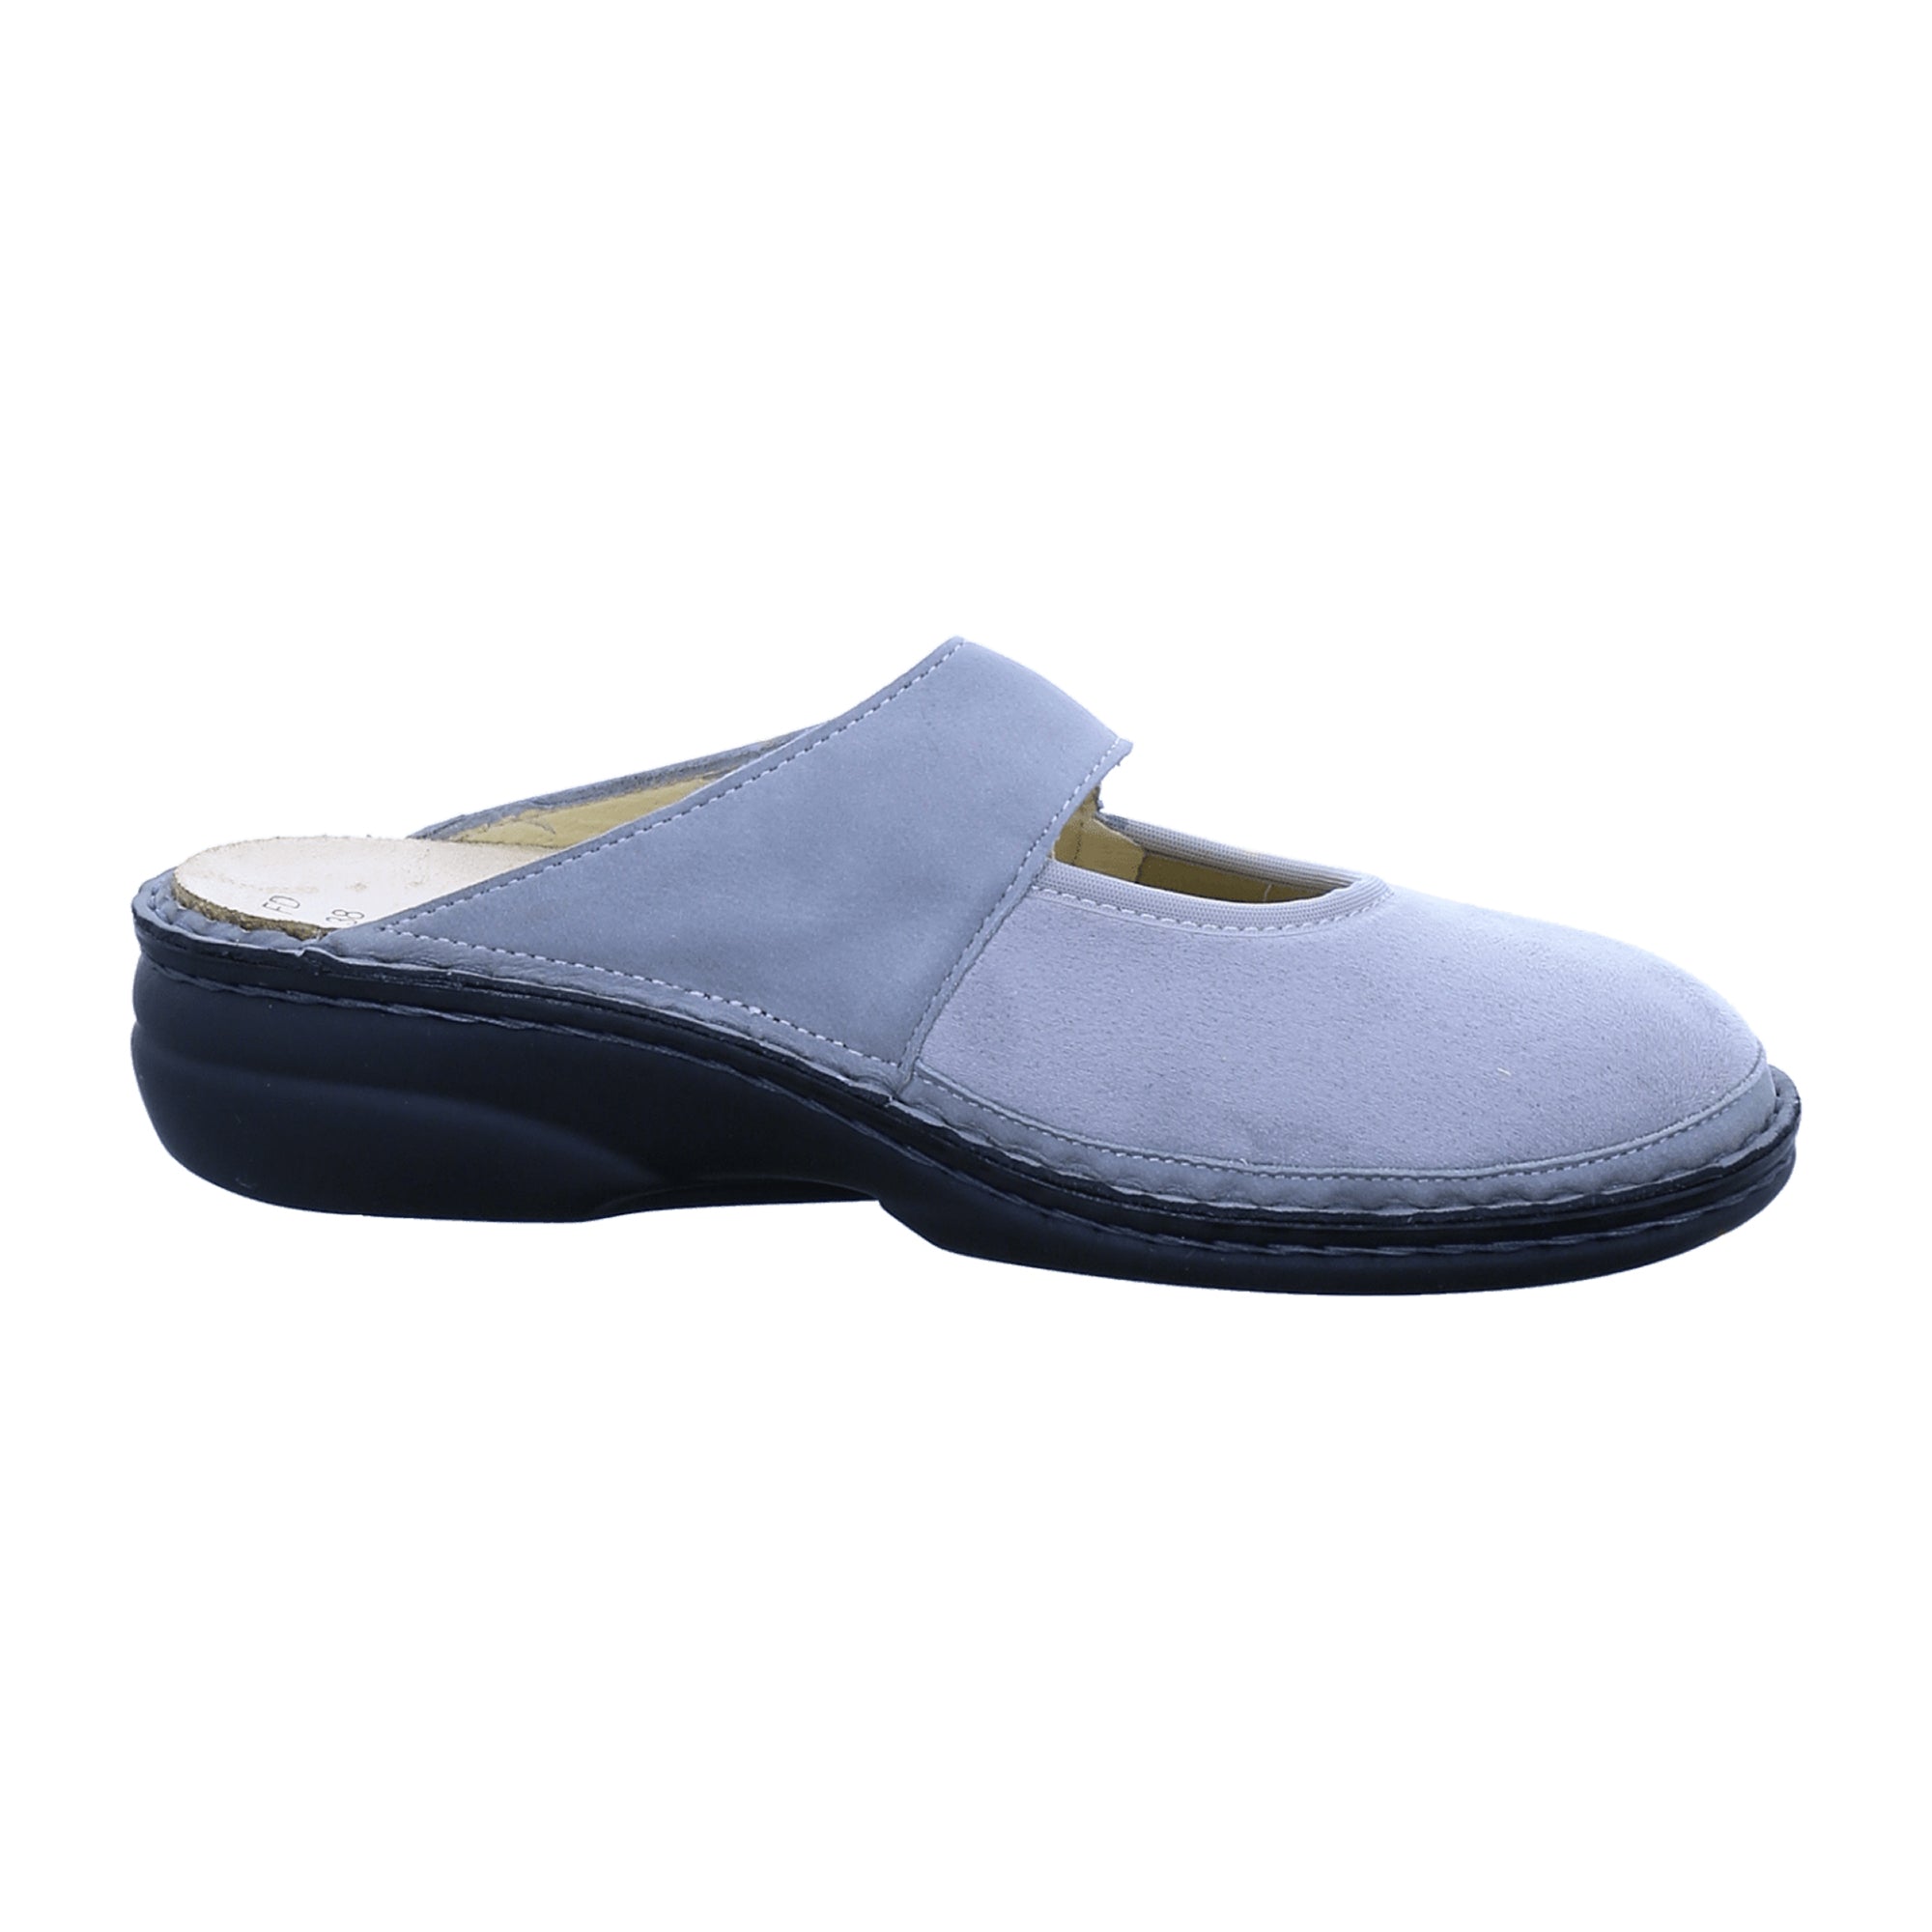 Finn Comfort Asinara Women's Stylish Grey Comfort Sandals